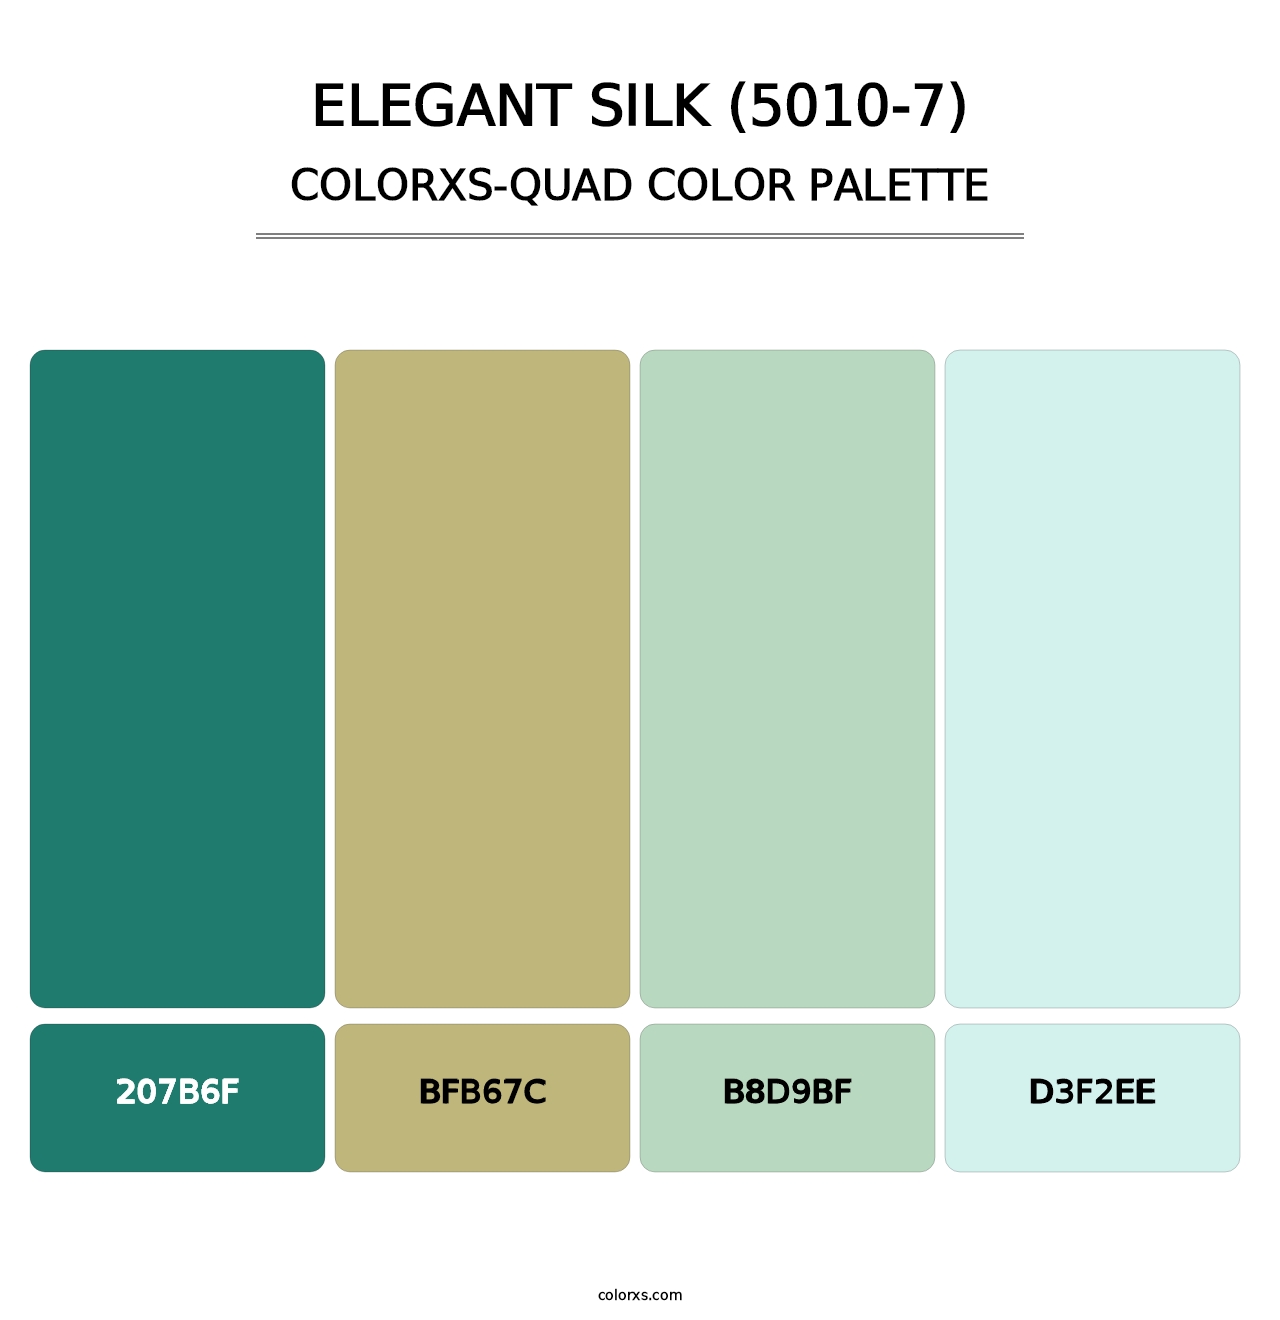 Elegant Silk (5010-7) - Colorxs Quad Palette